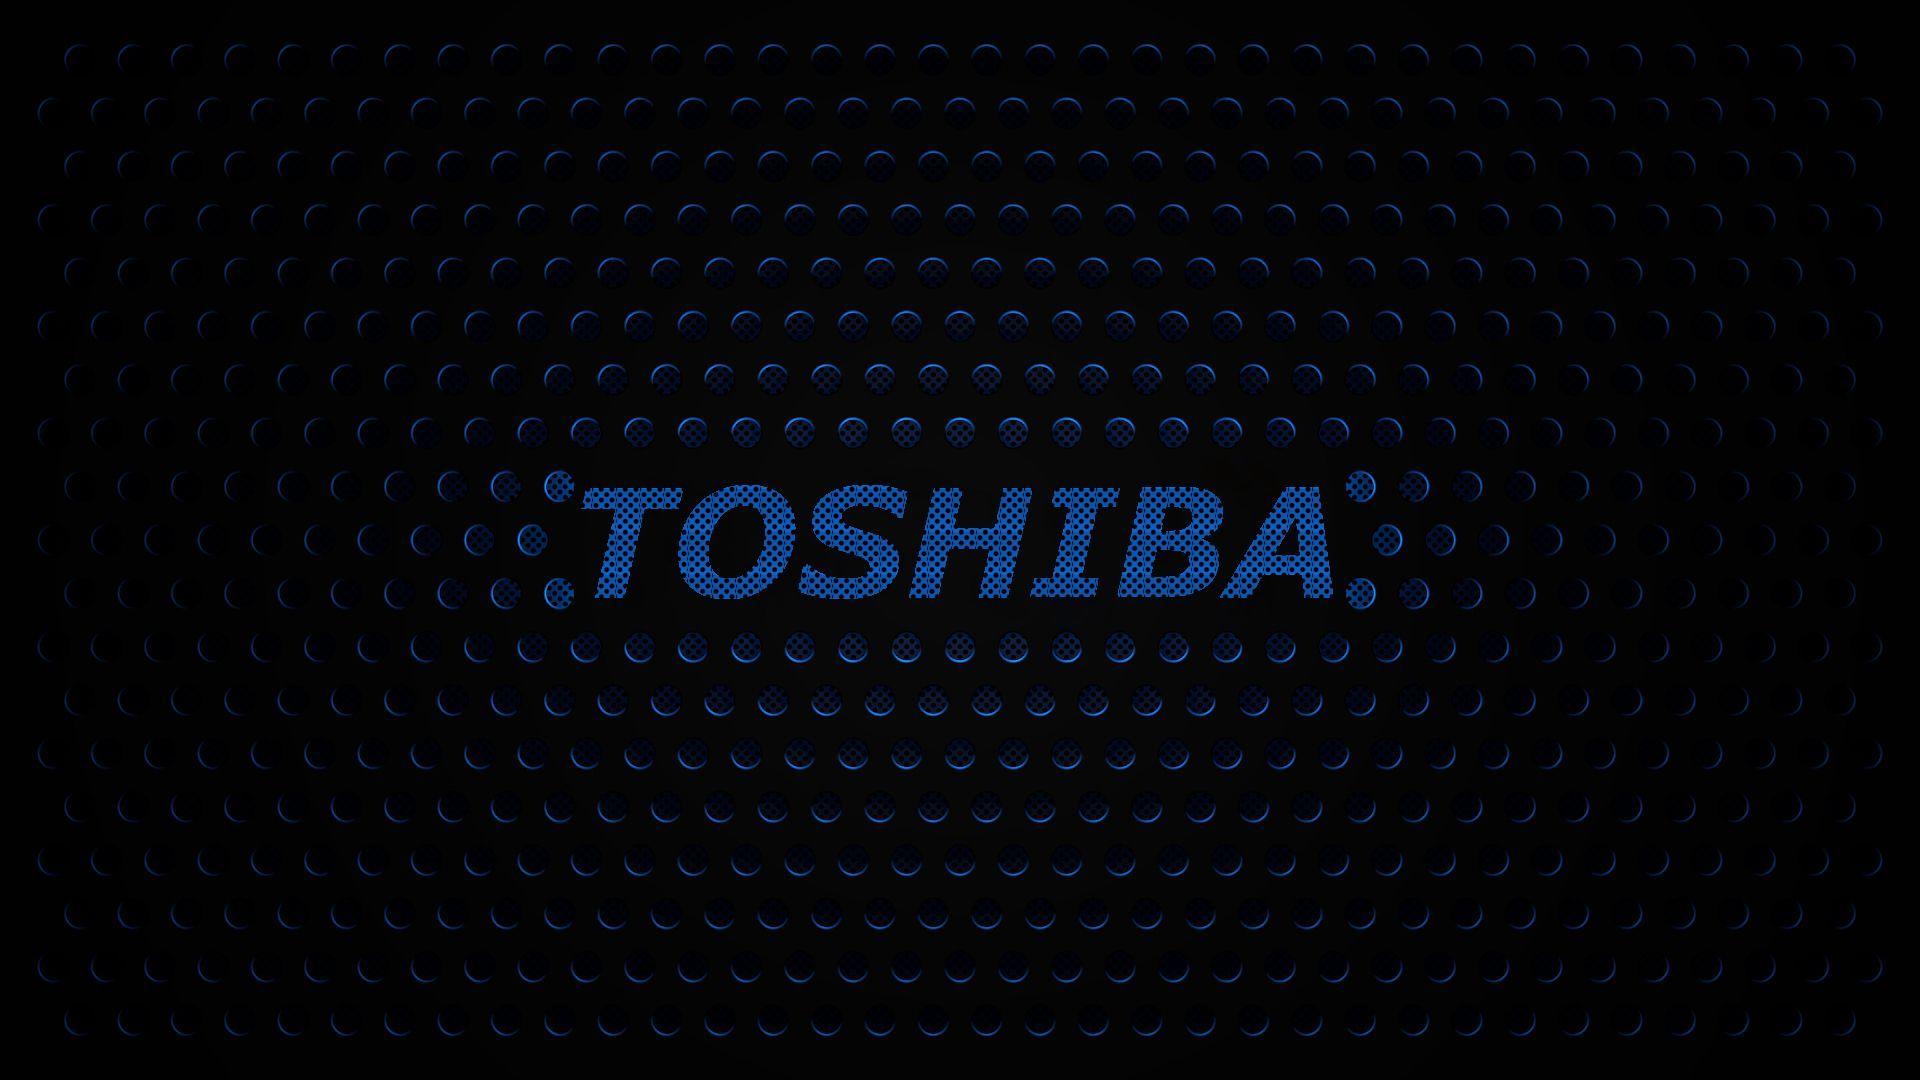 Toshiba Background Wallpaper